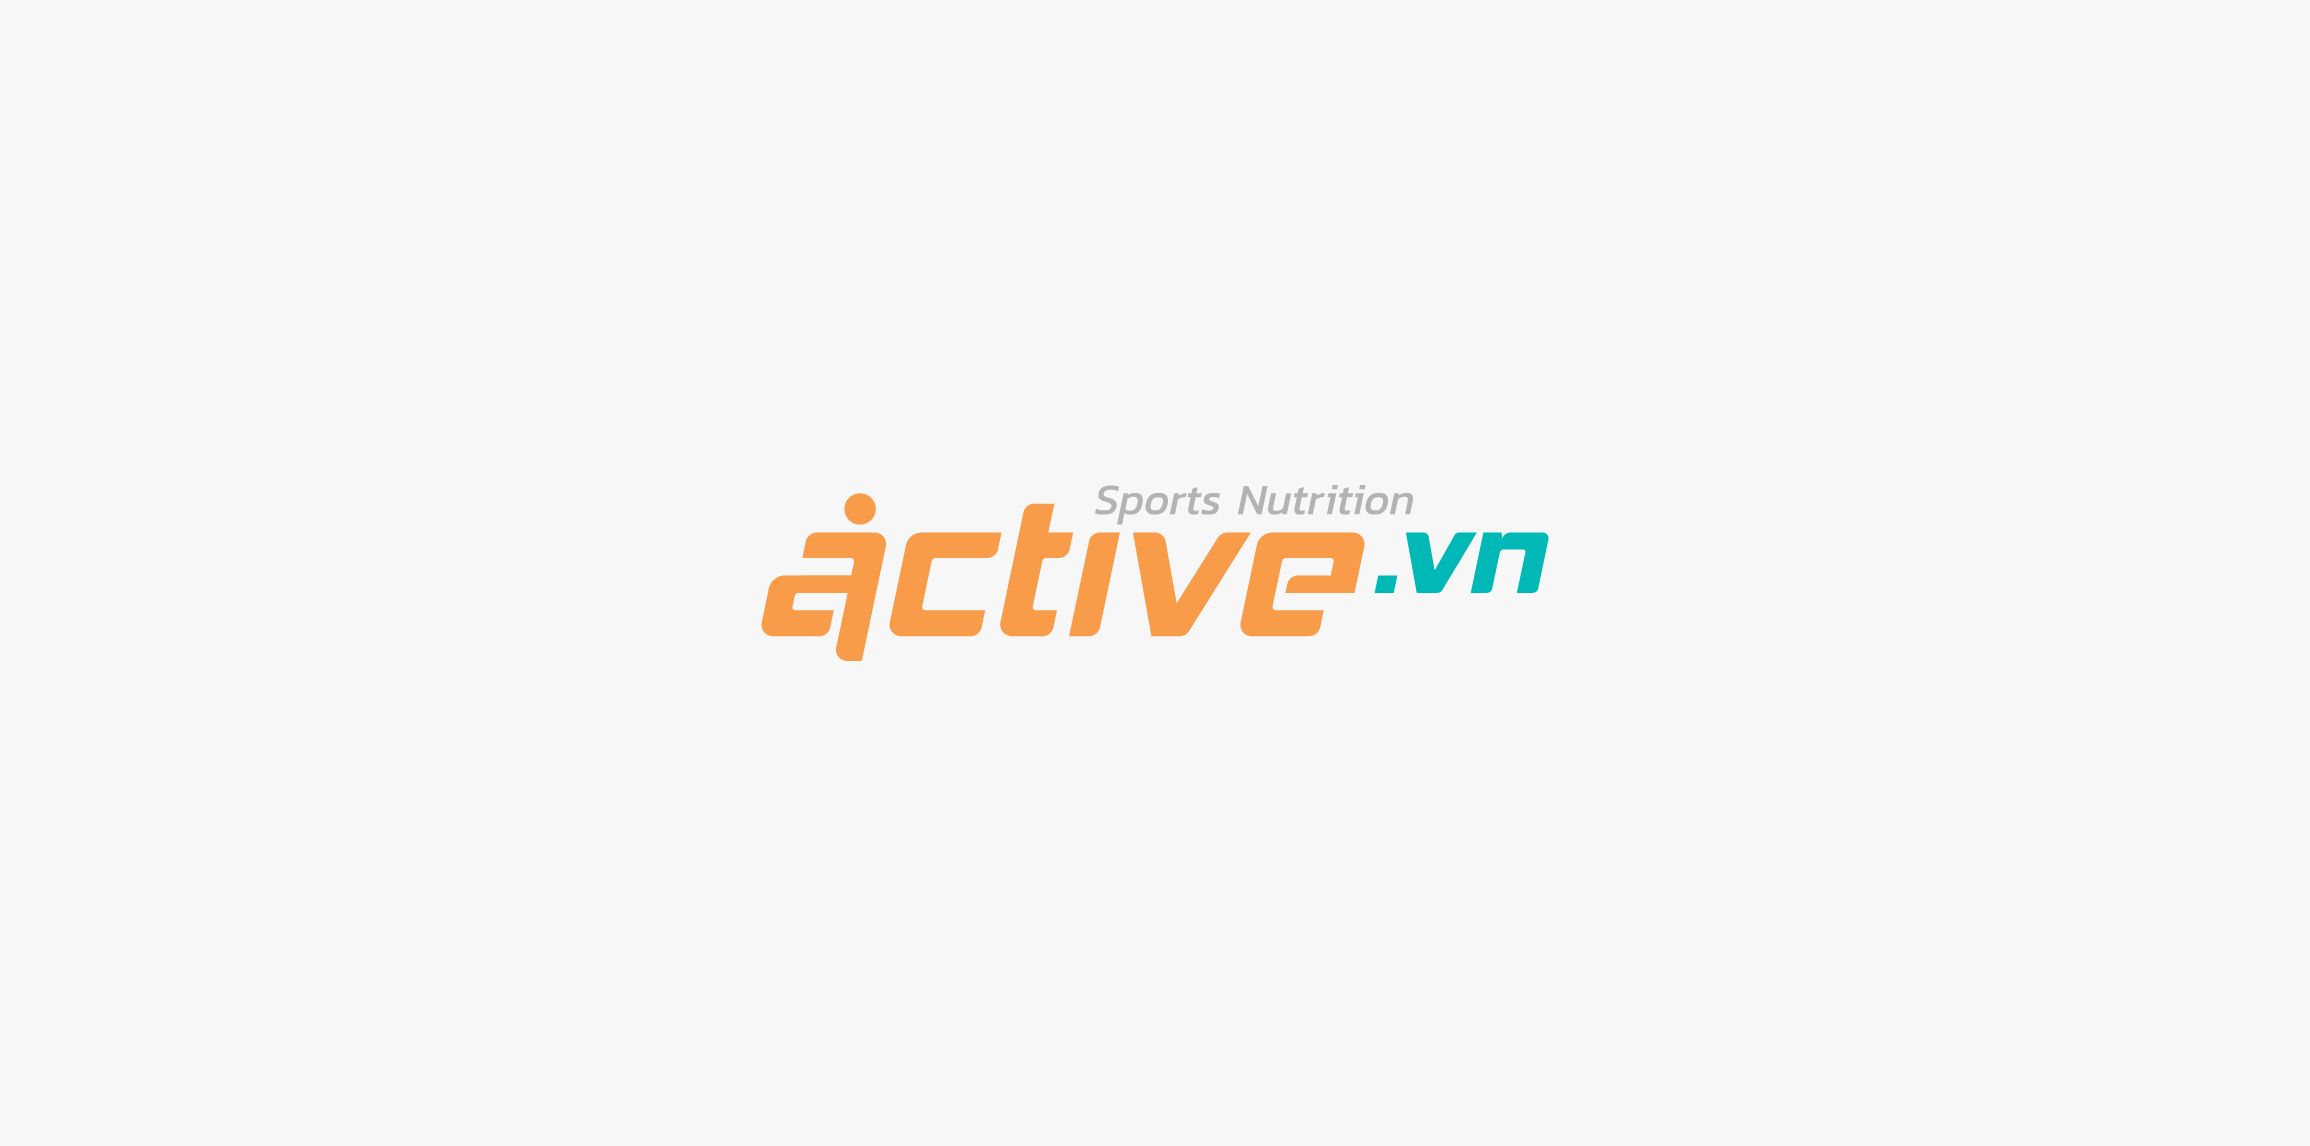 Active.vn